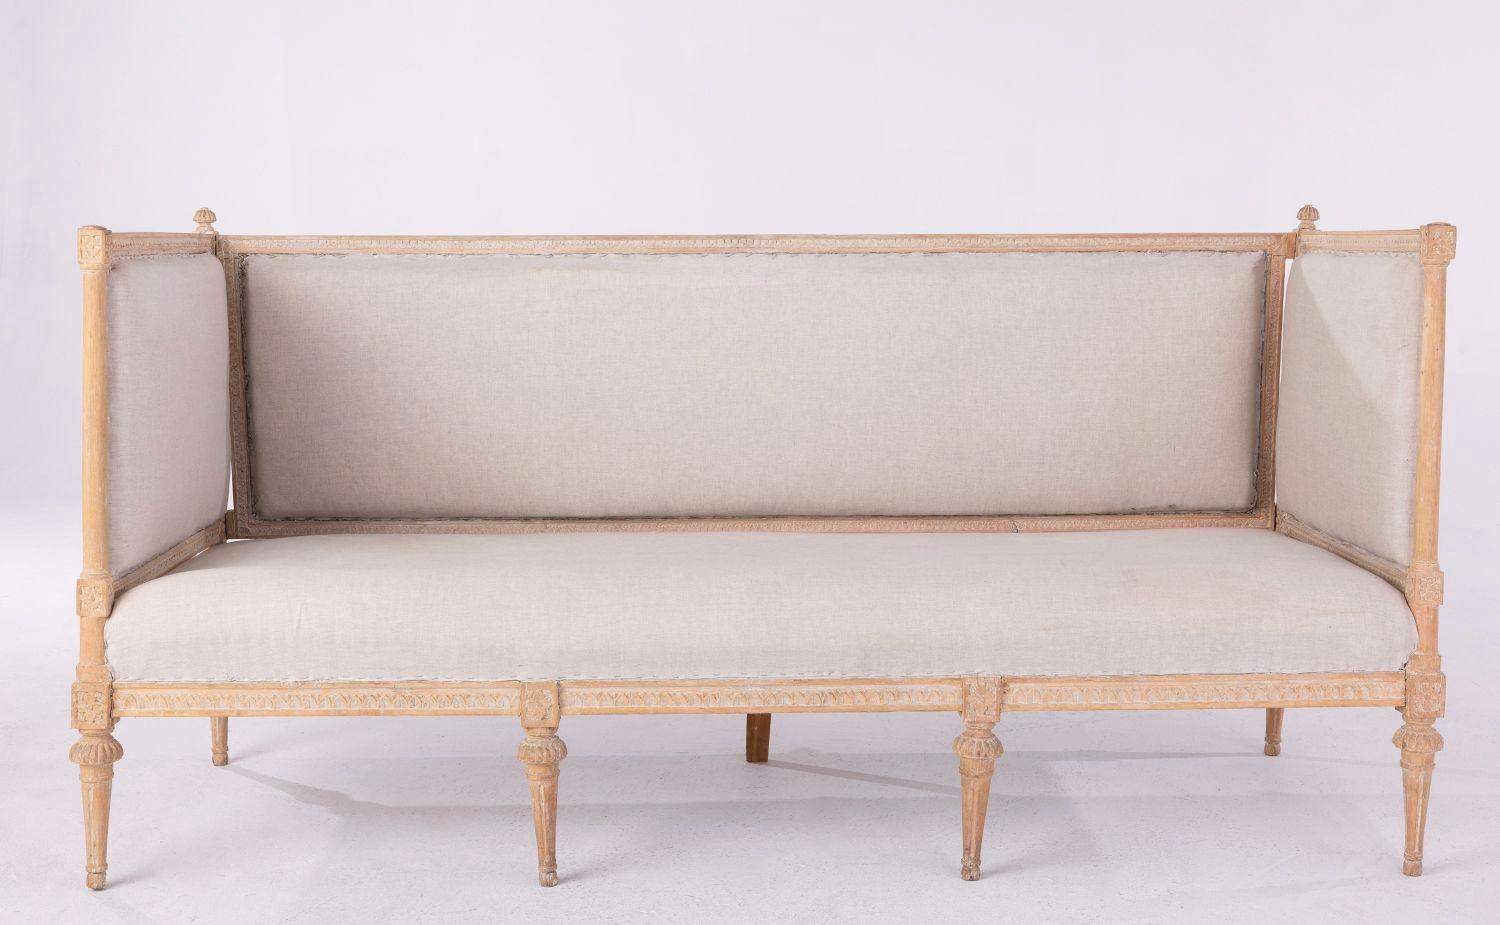 19th c. Swedish Gustavian Style Sofa Bench in Original Patina For Sale 6